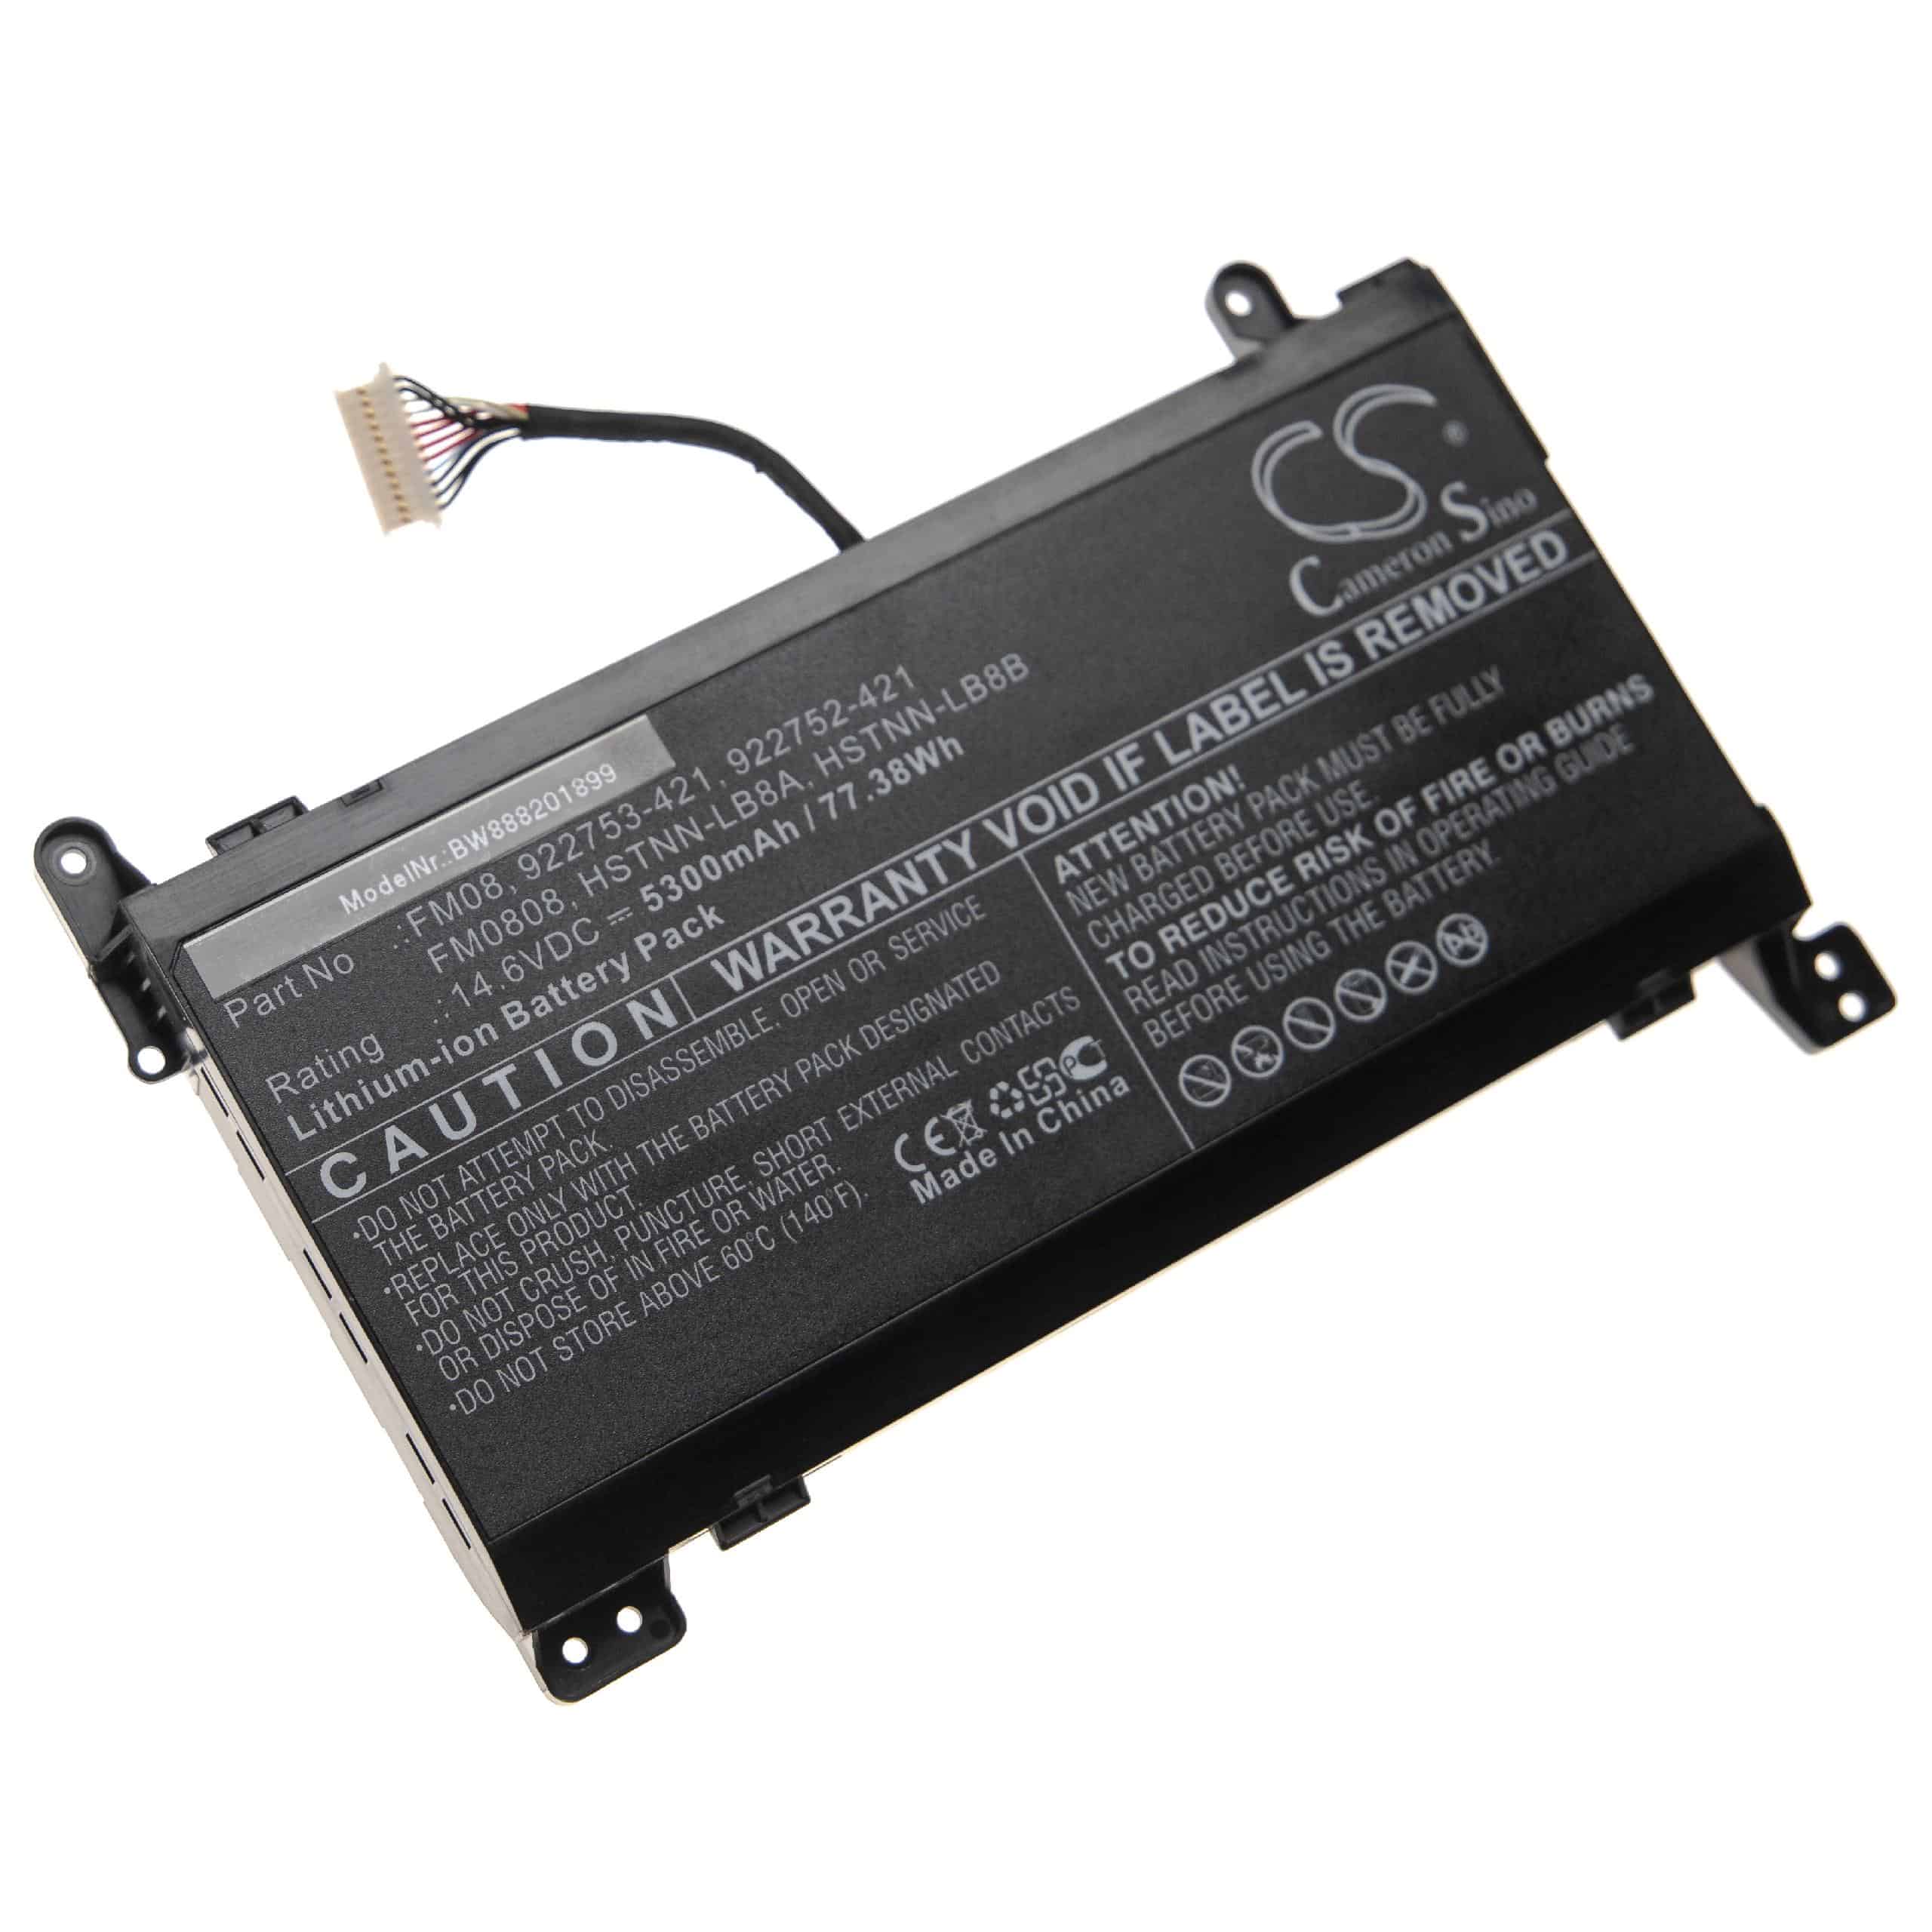 Akumulator do laptopa zamiennik HP 922753-421, 922752-421, 922976-855 - 5300 mAh 14,6 V Li-Ion, czarny